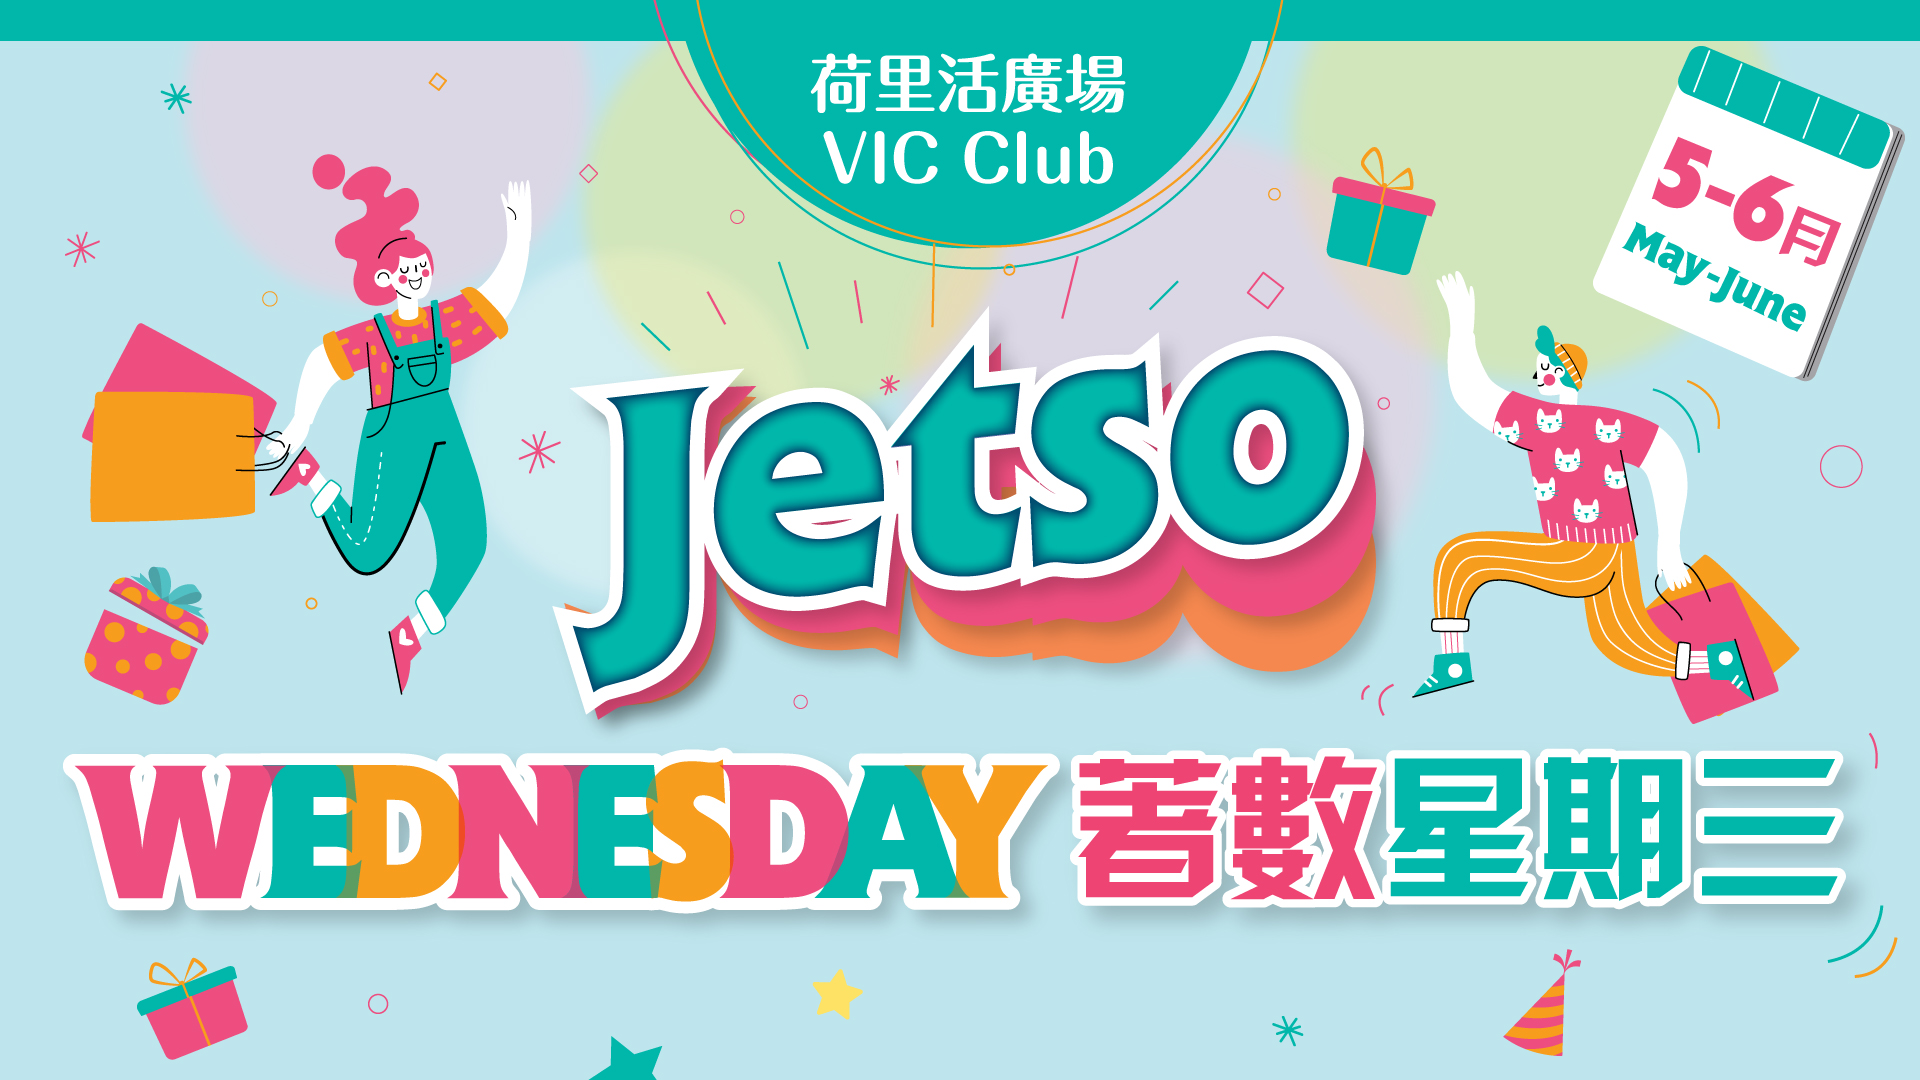 Jetso Wednesday 著數星期三(5-6月)